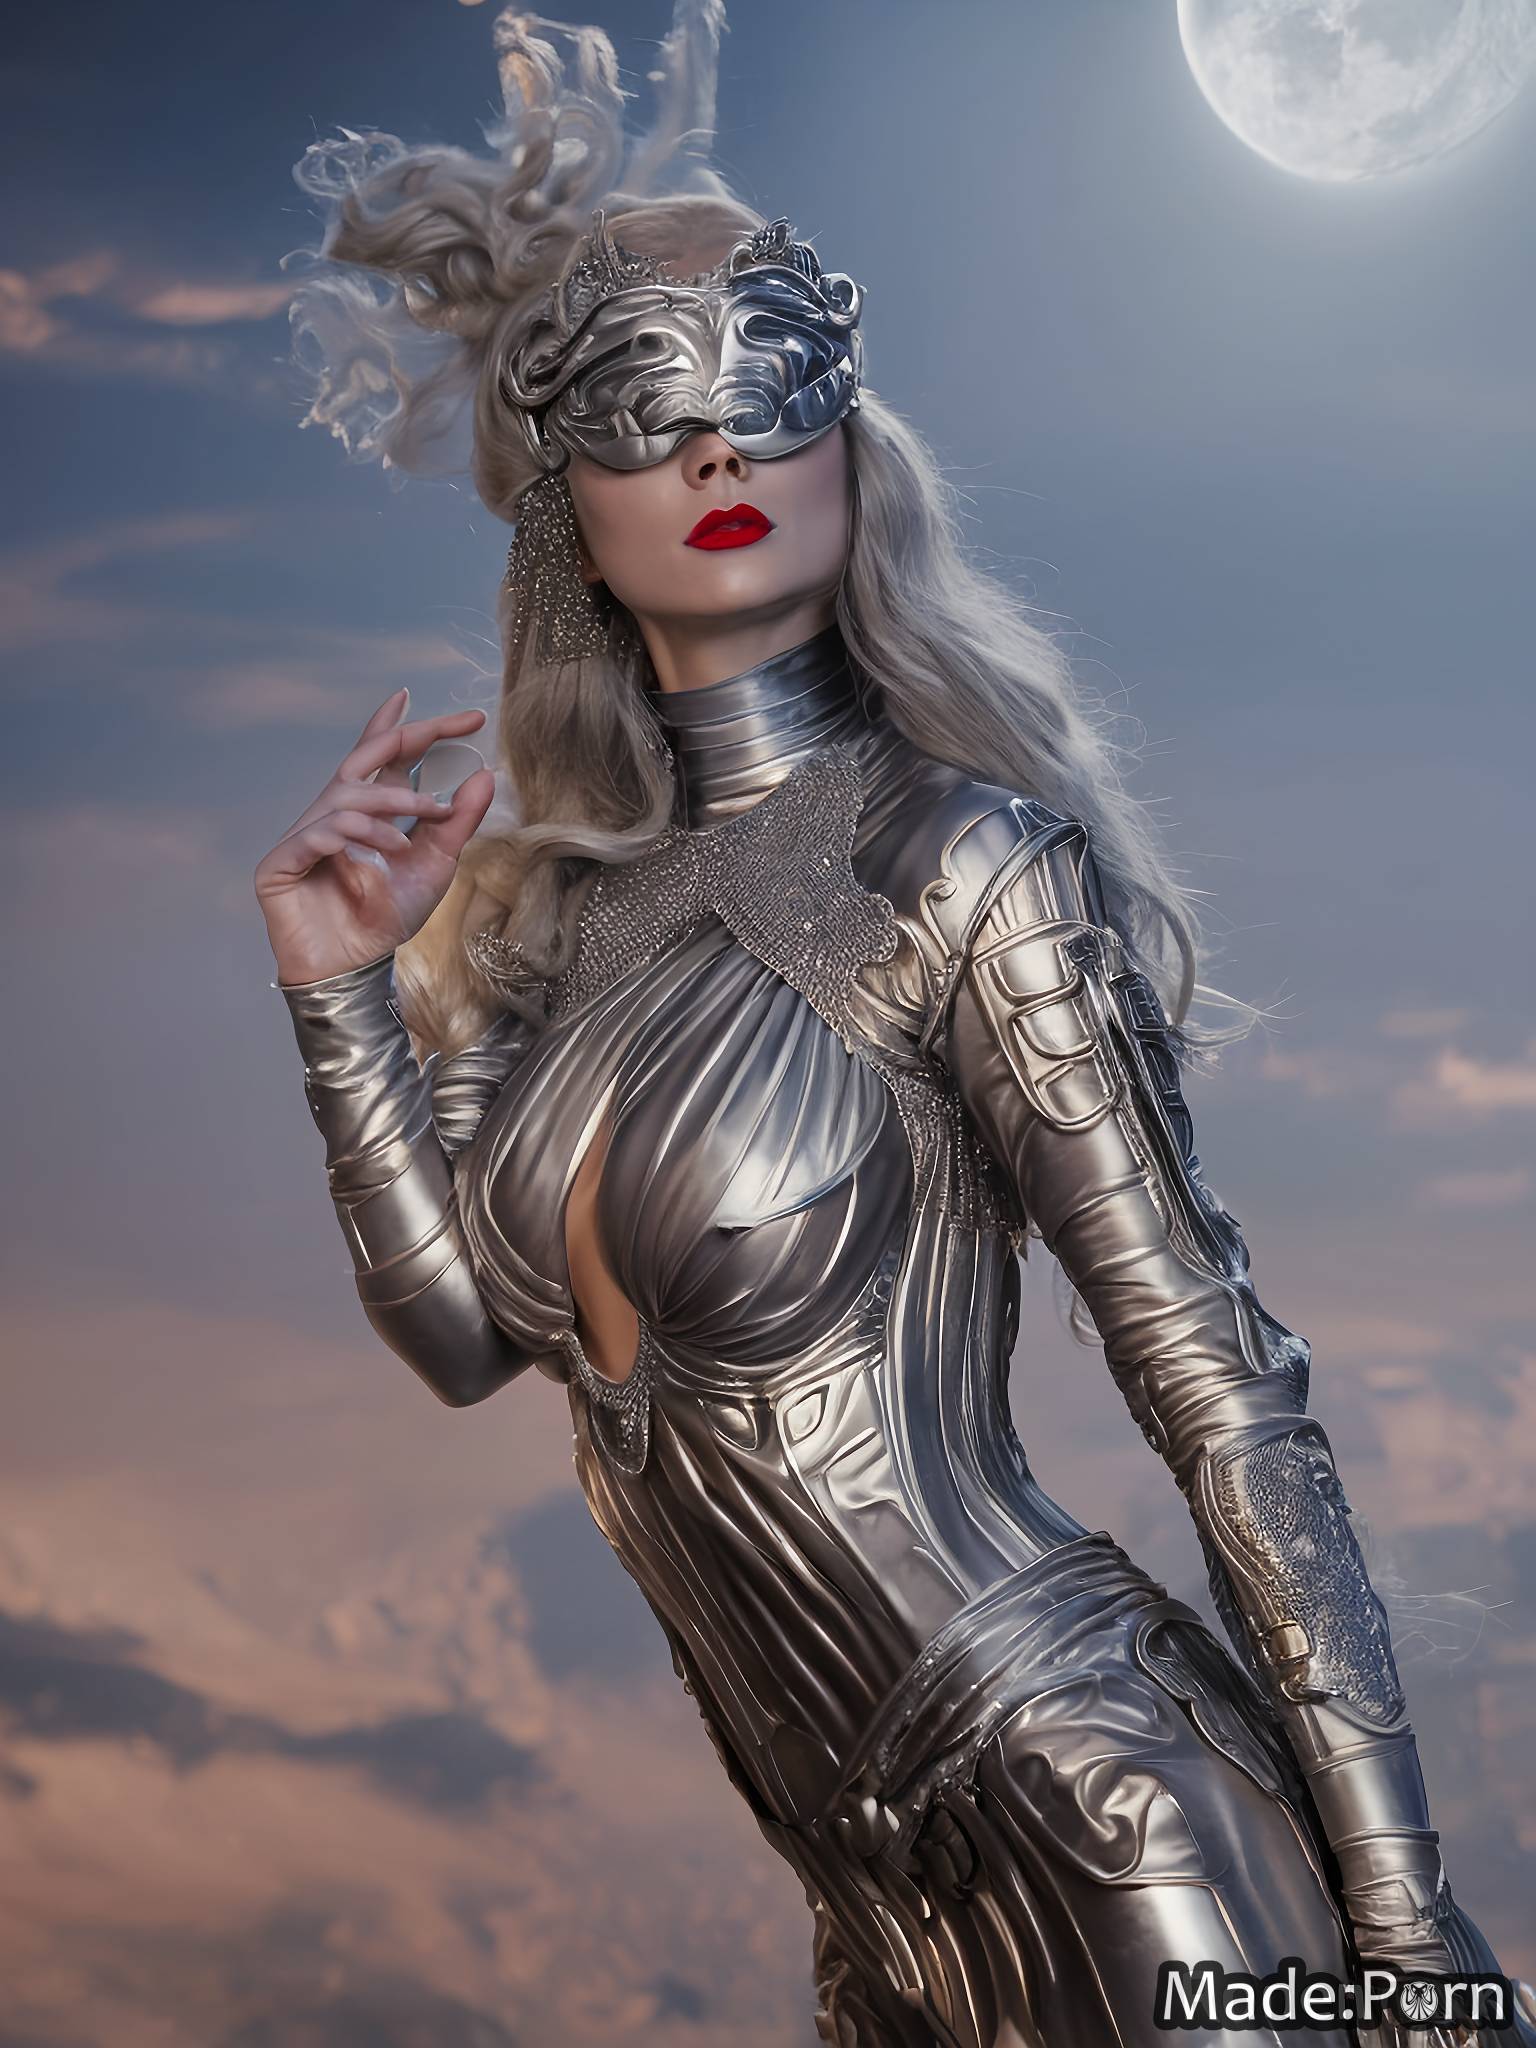 venetian mask aluminum natural tits german sunset platinum silver